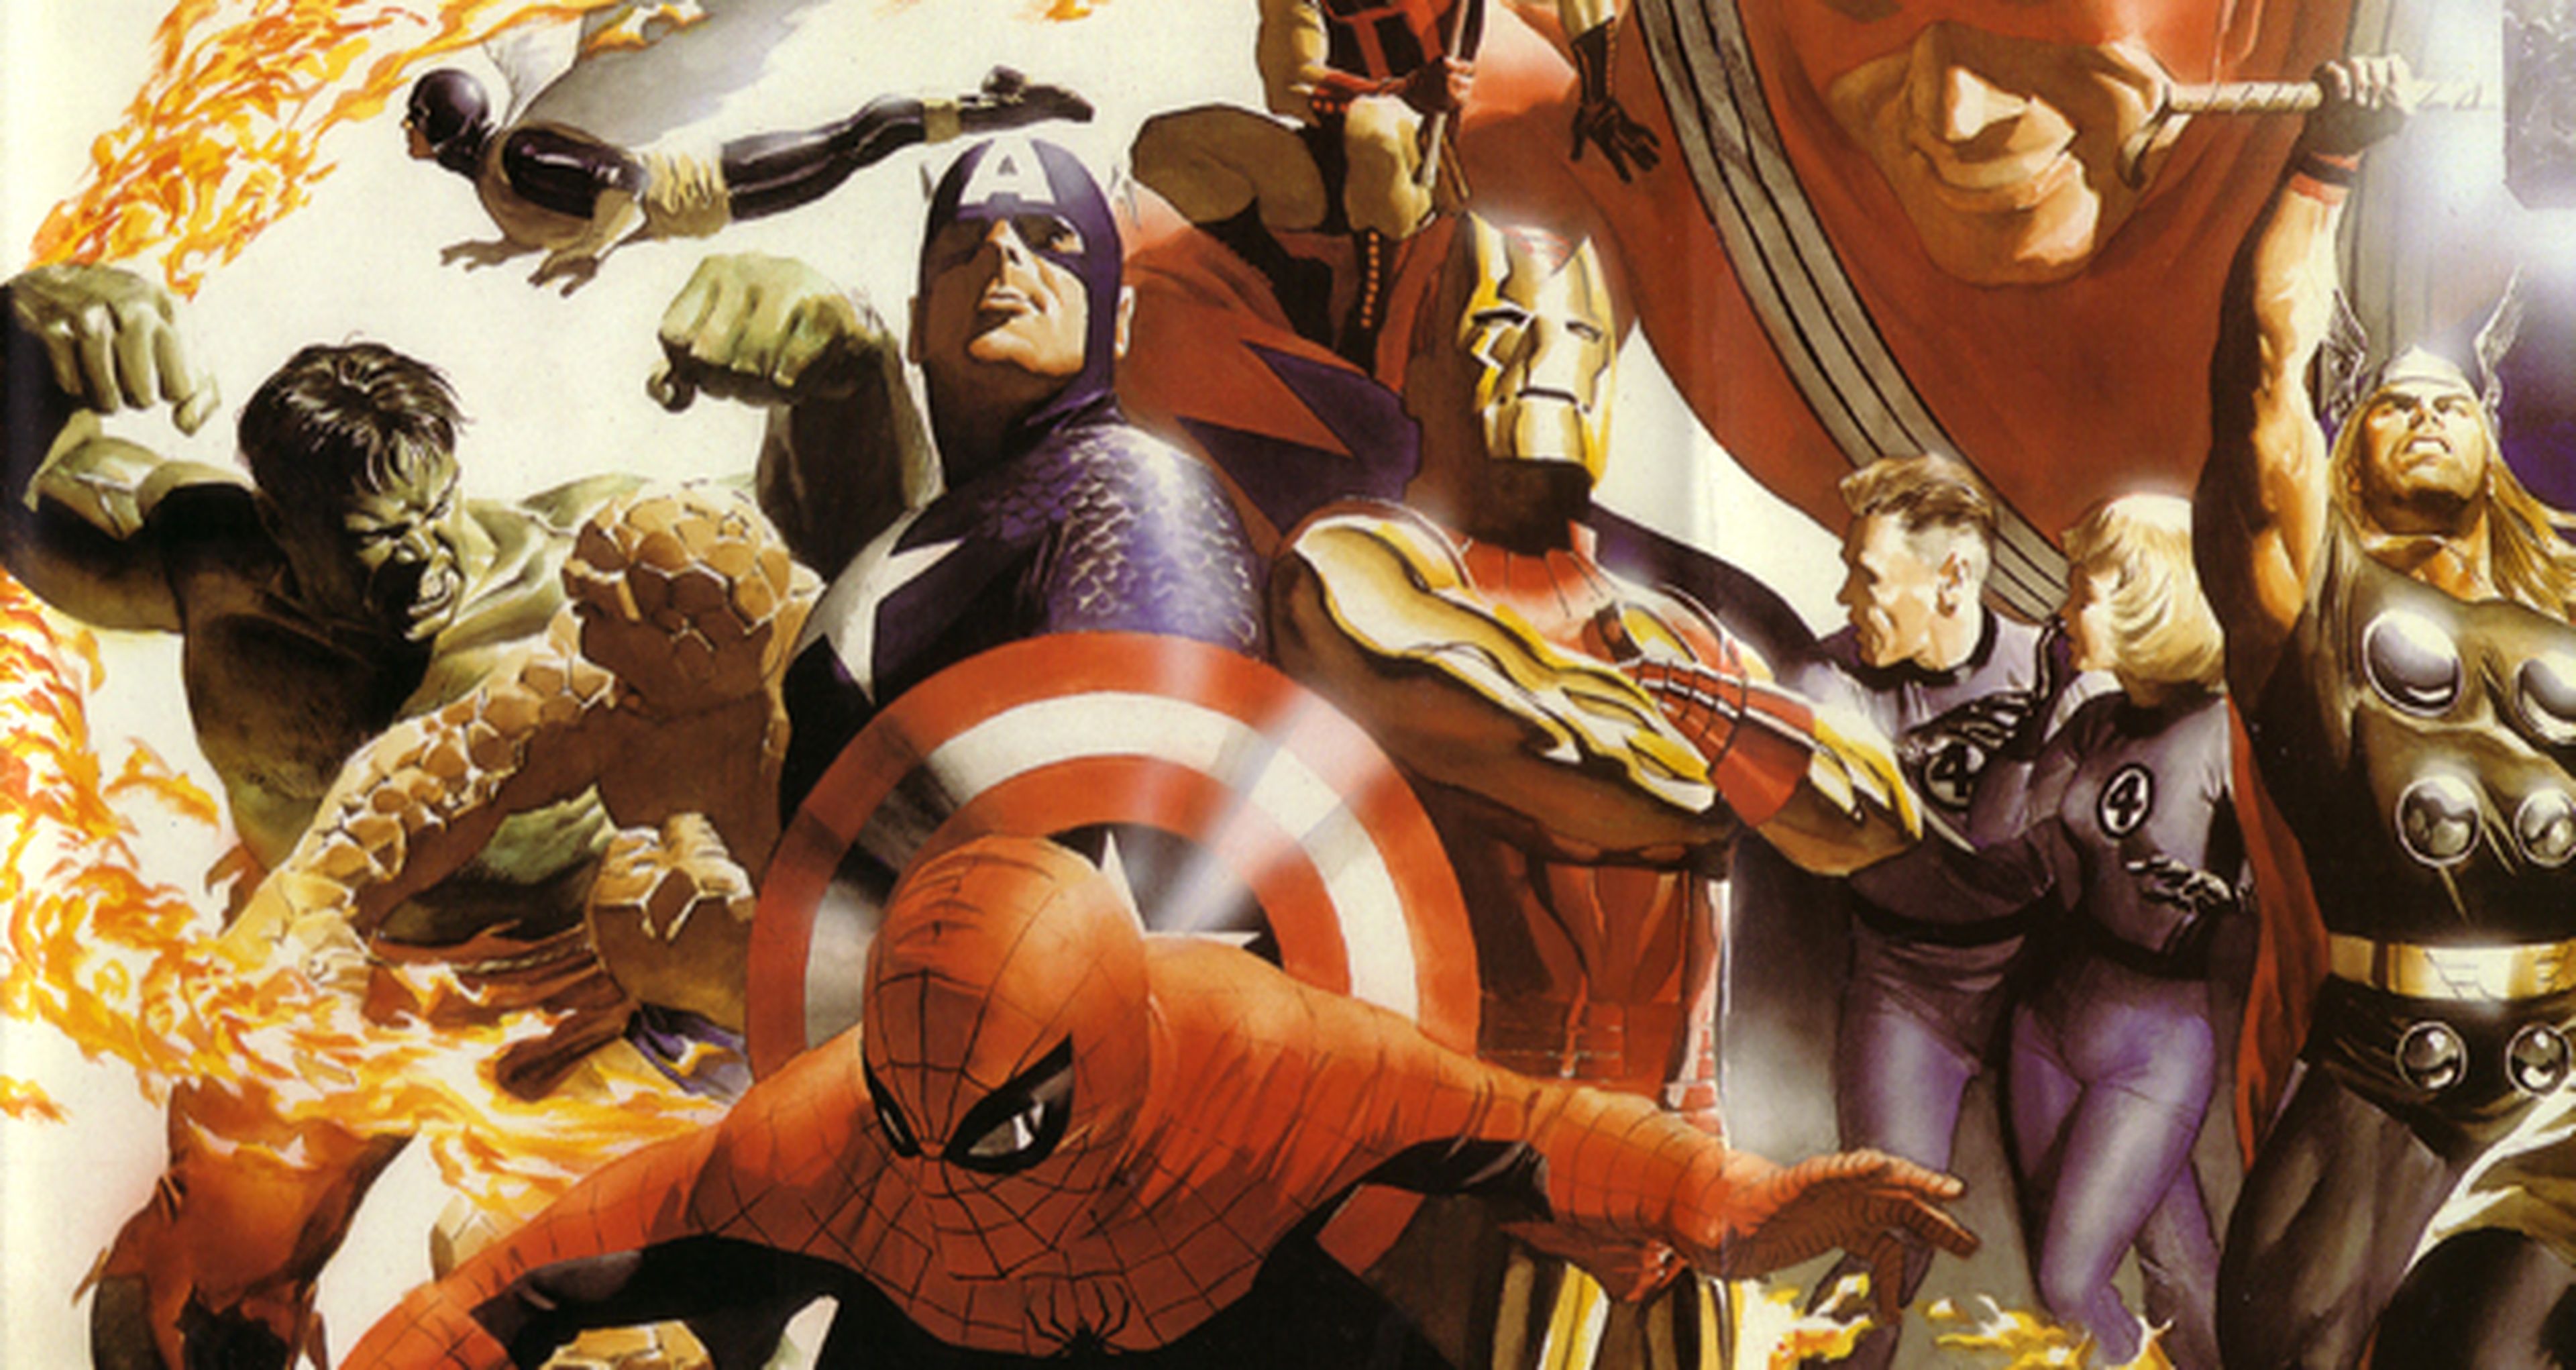 Los mejores cómics: Marvels, de Ross y Busiek